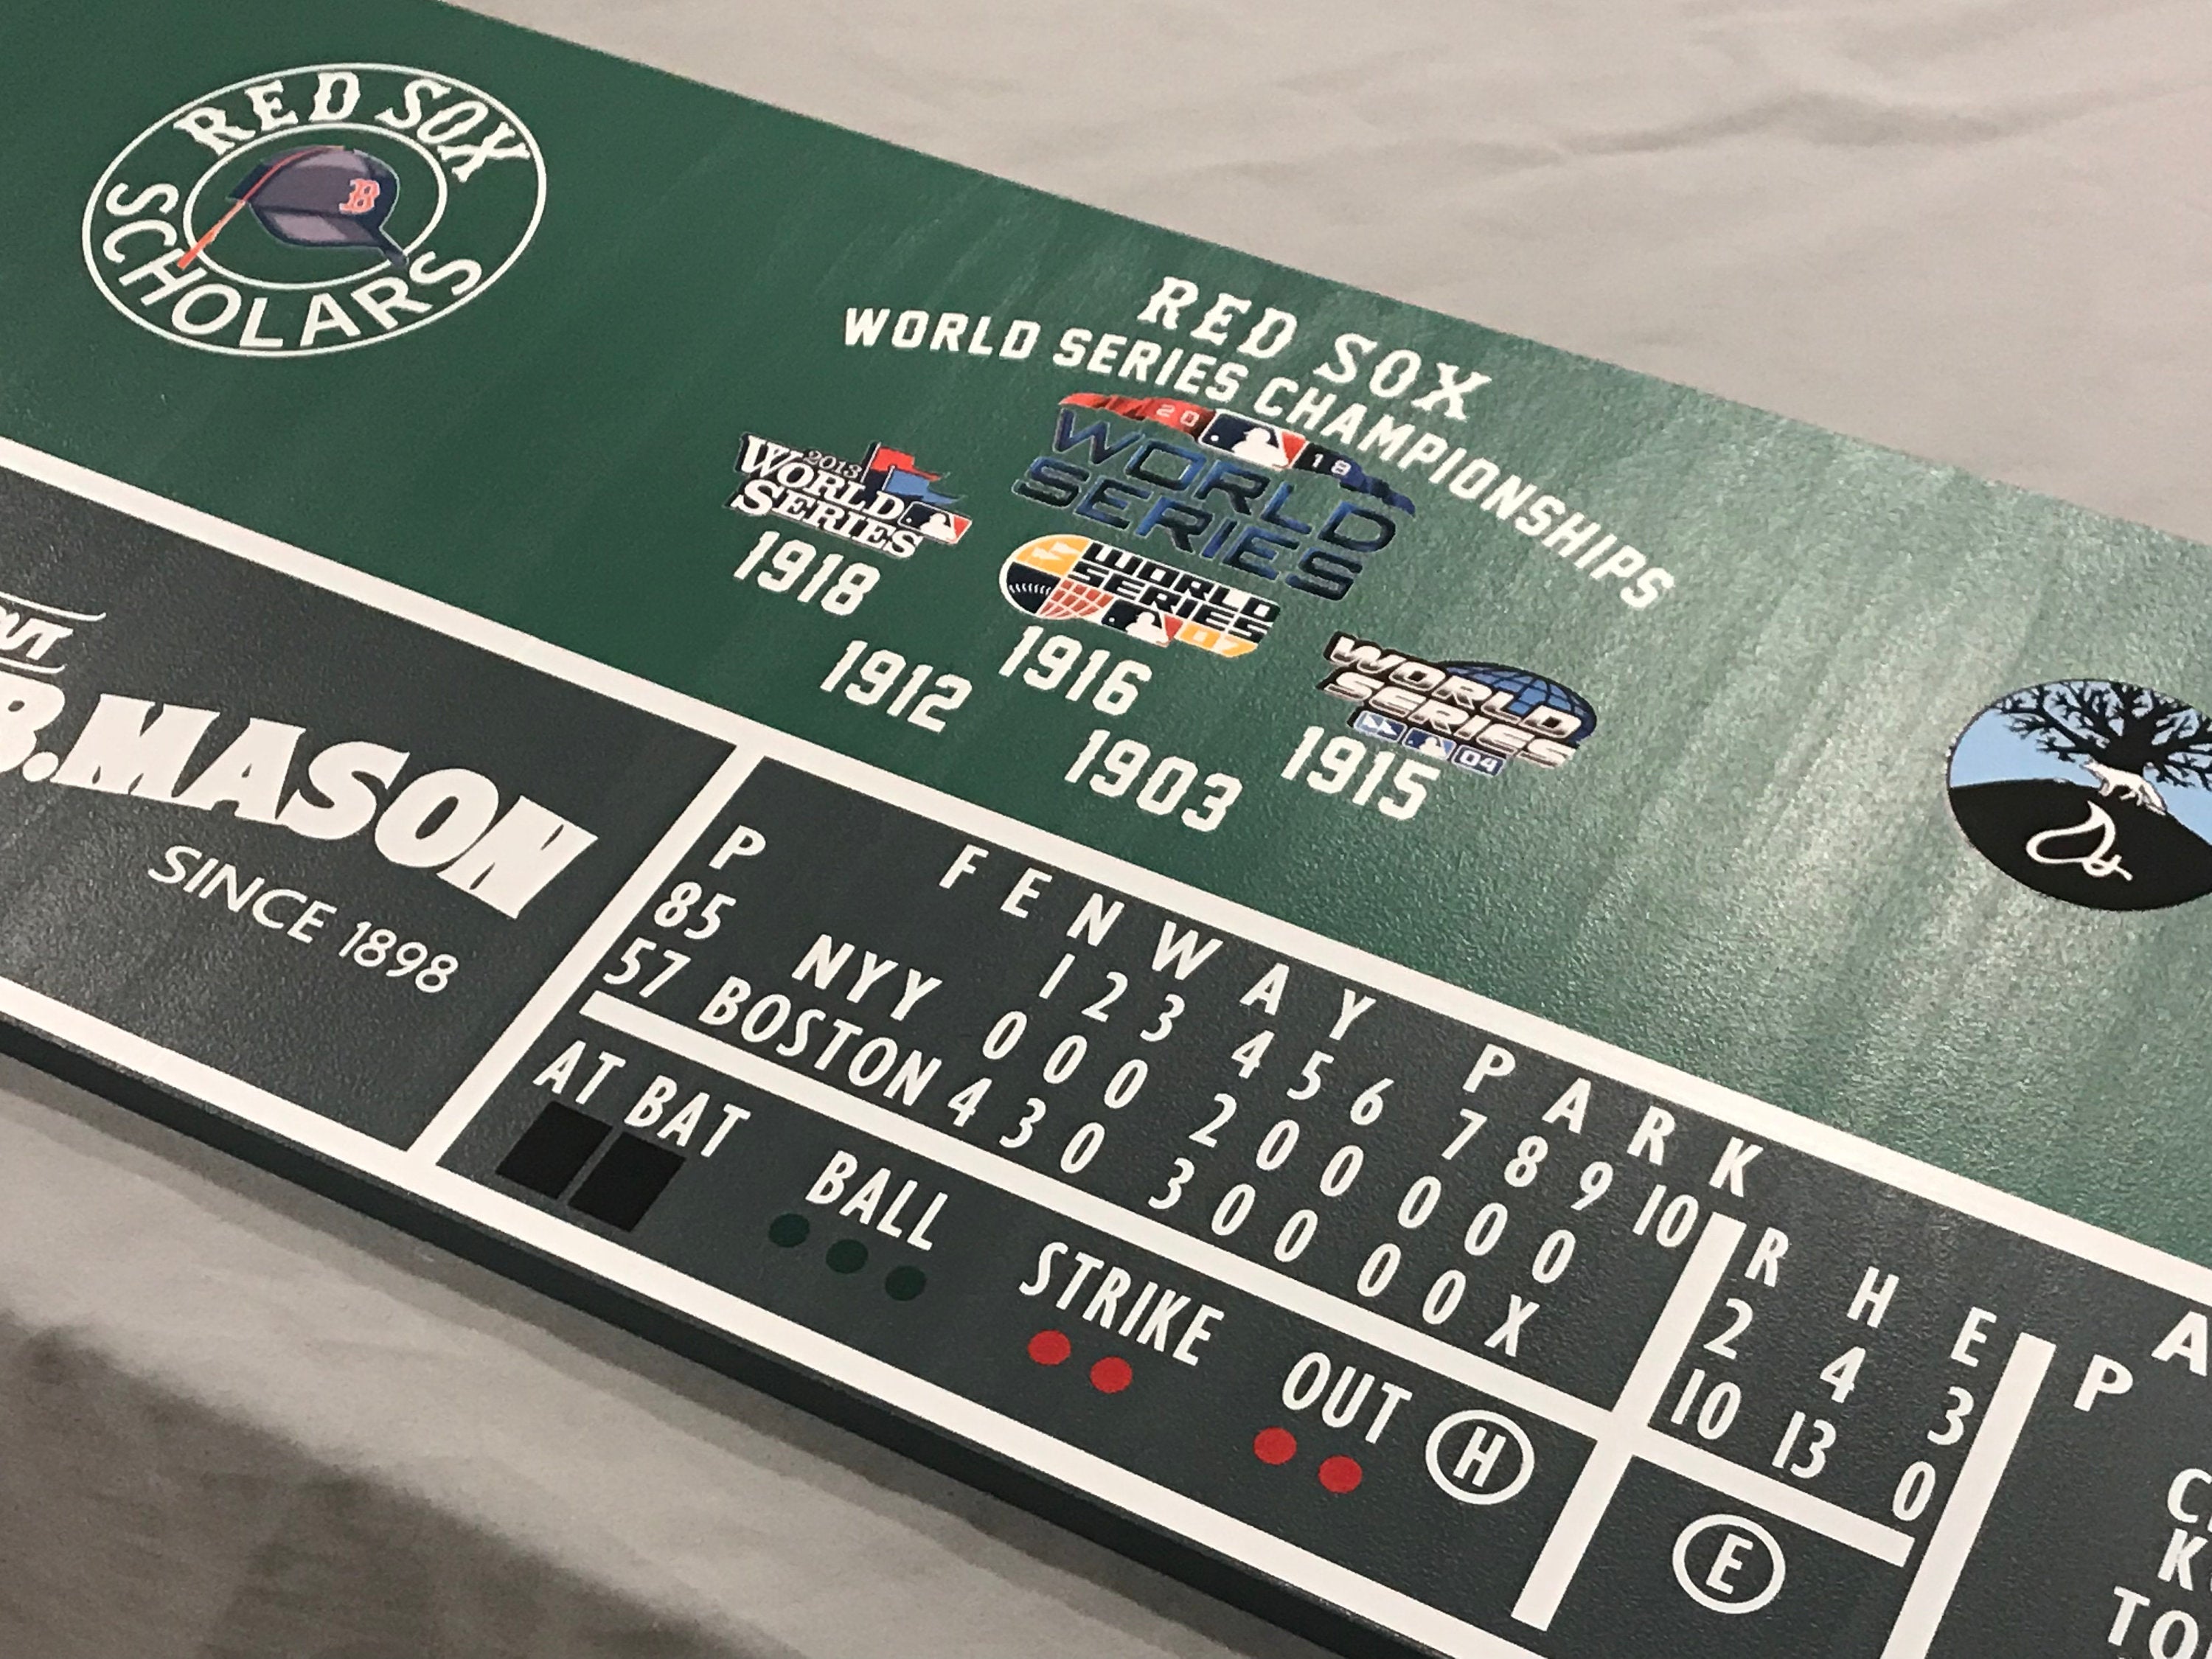 Replica Fenway Park Green Monster Sign Scoreboard Boston Red Sox World Series Logos